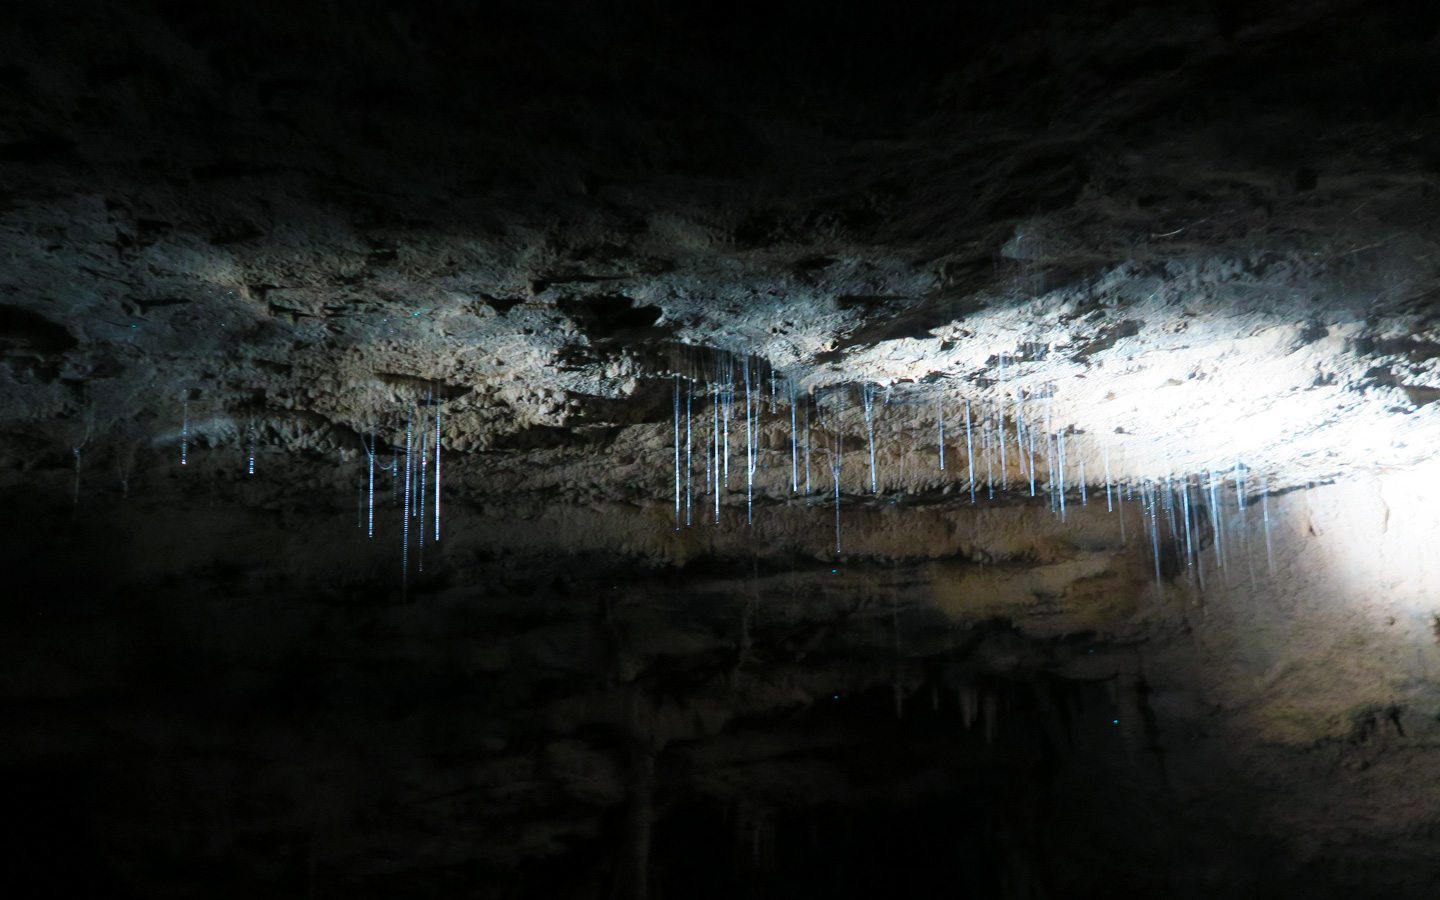 glow worm webs in waitomo caves in new zealand